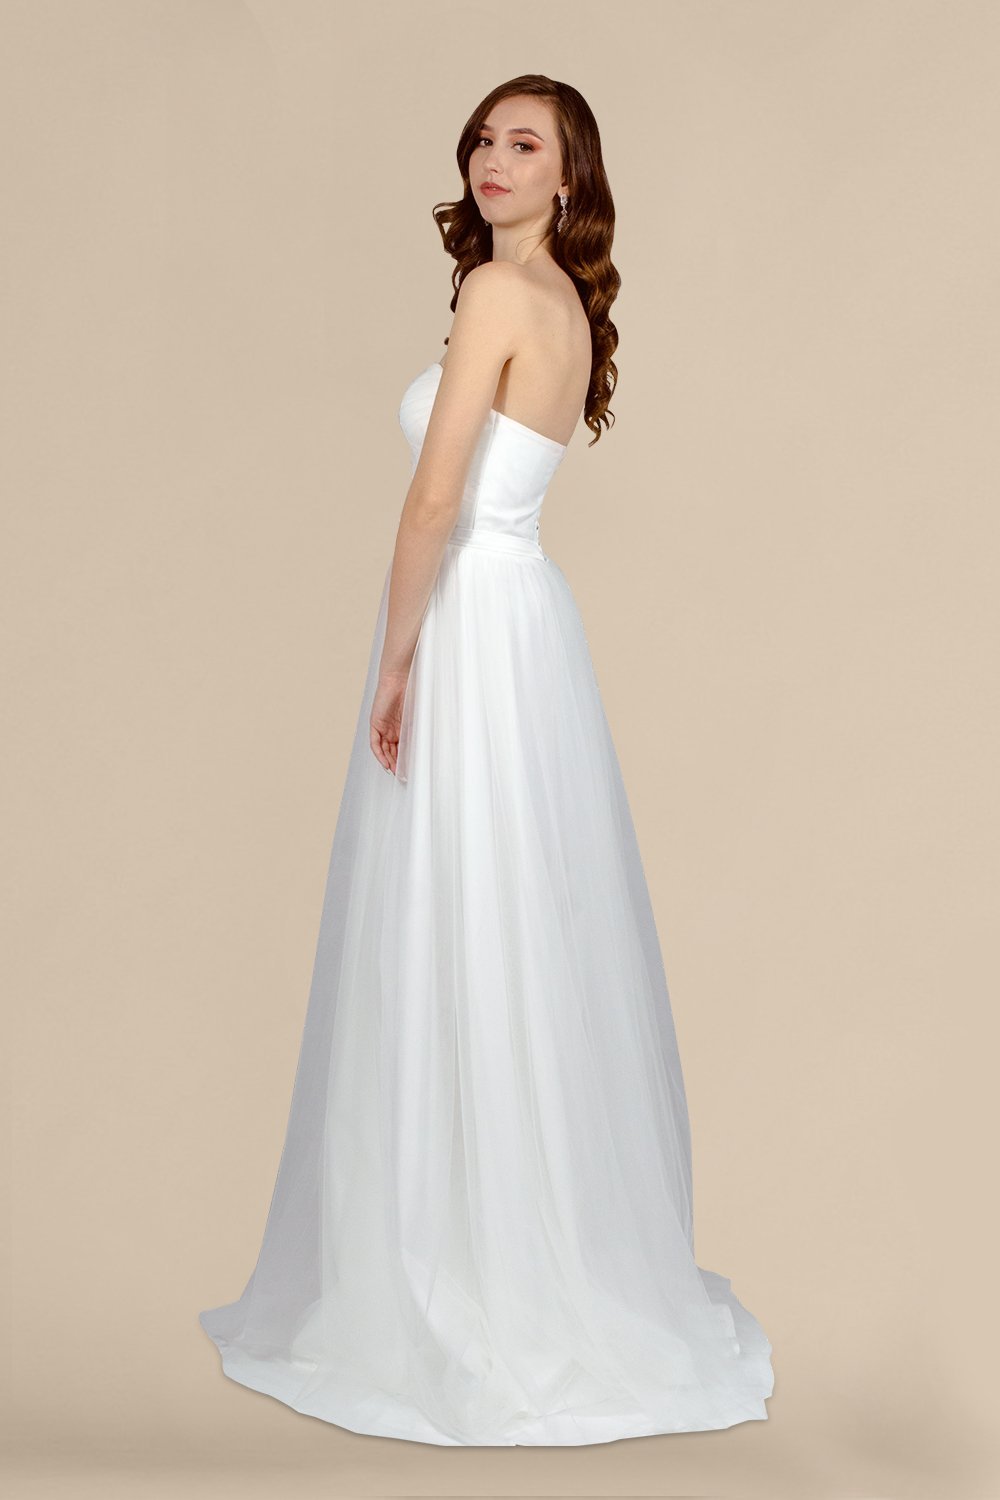 custom bridal dressmaker simple wedding gowns perth australia online envious bridal & formal